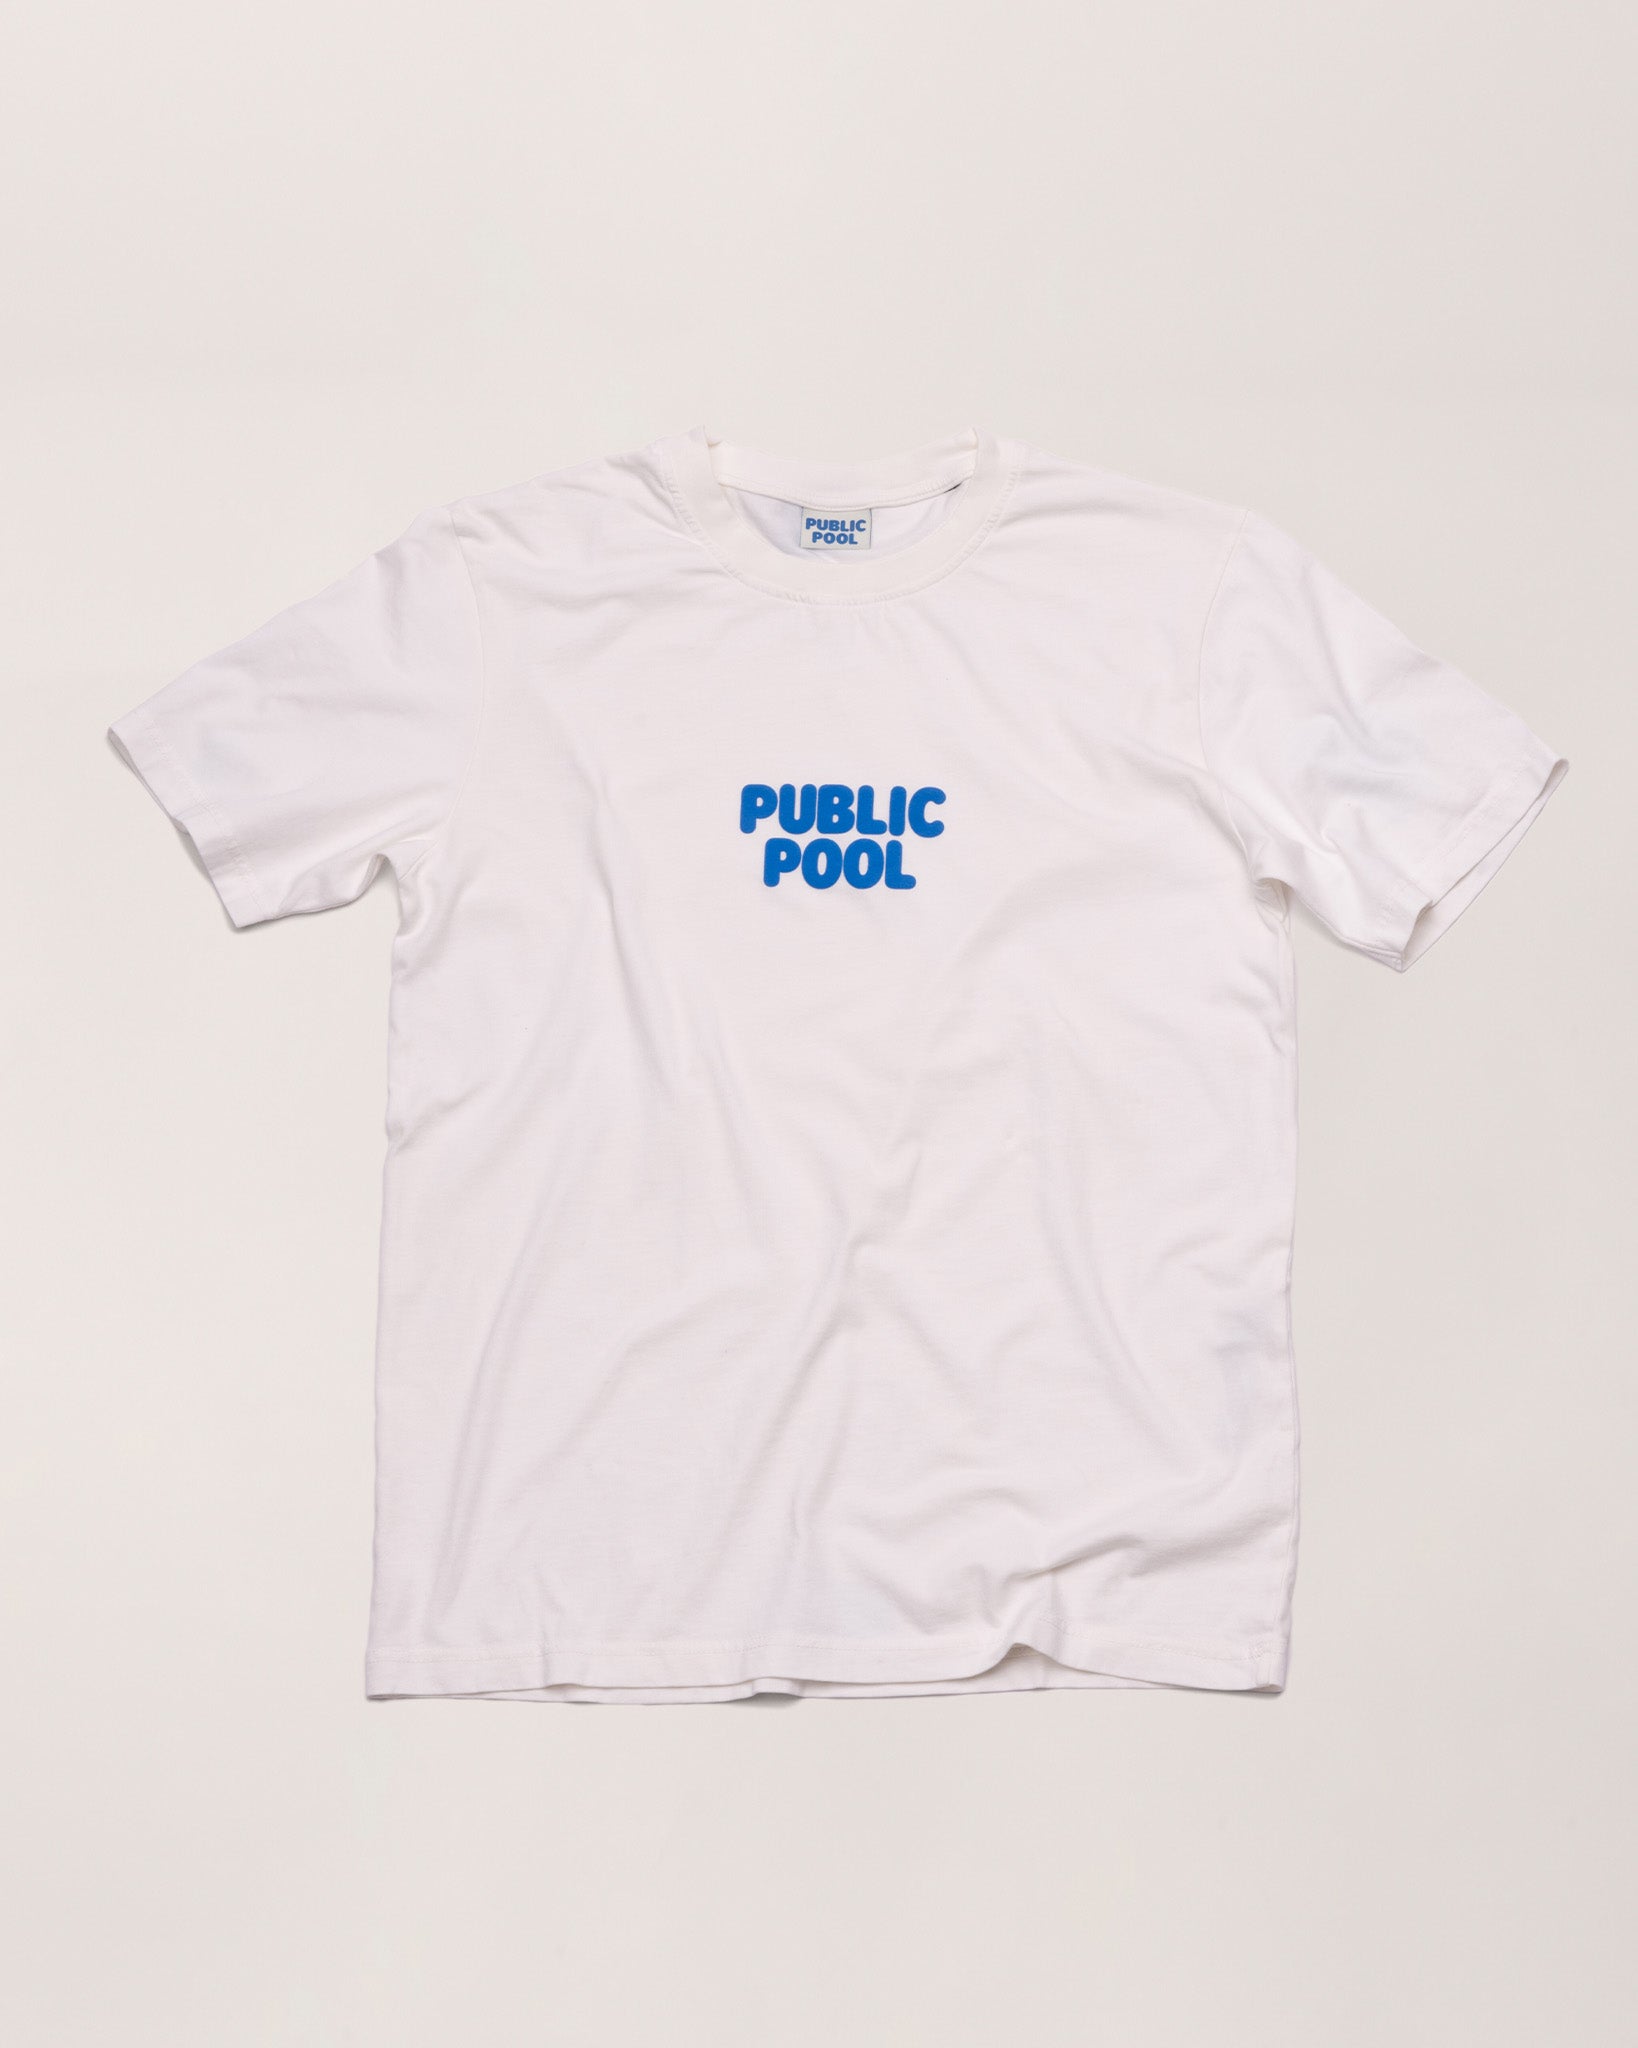 A white tee shirt with a blue Public Pool logo. 